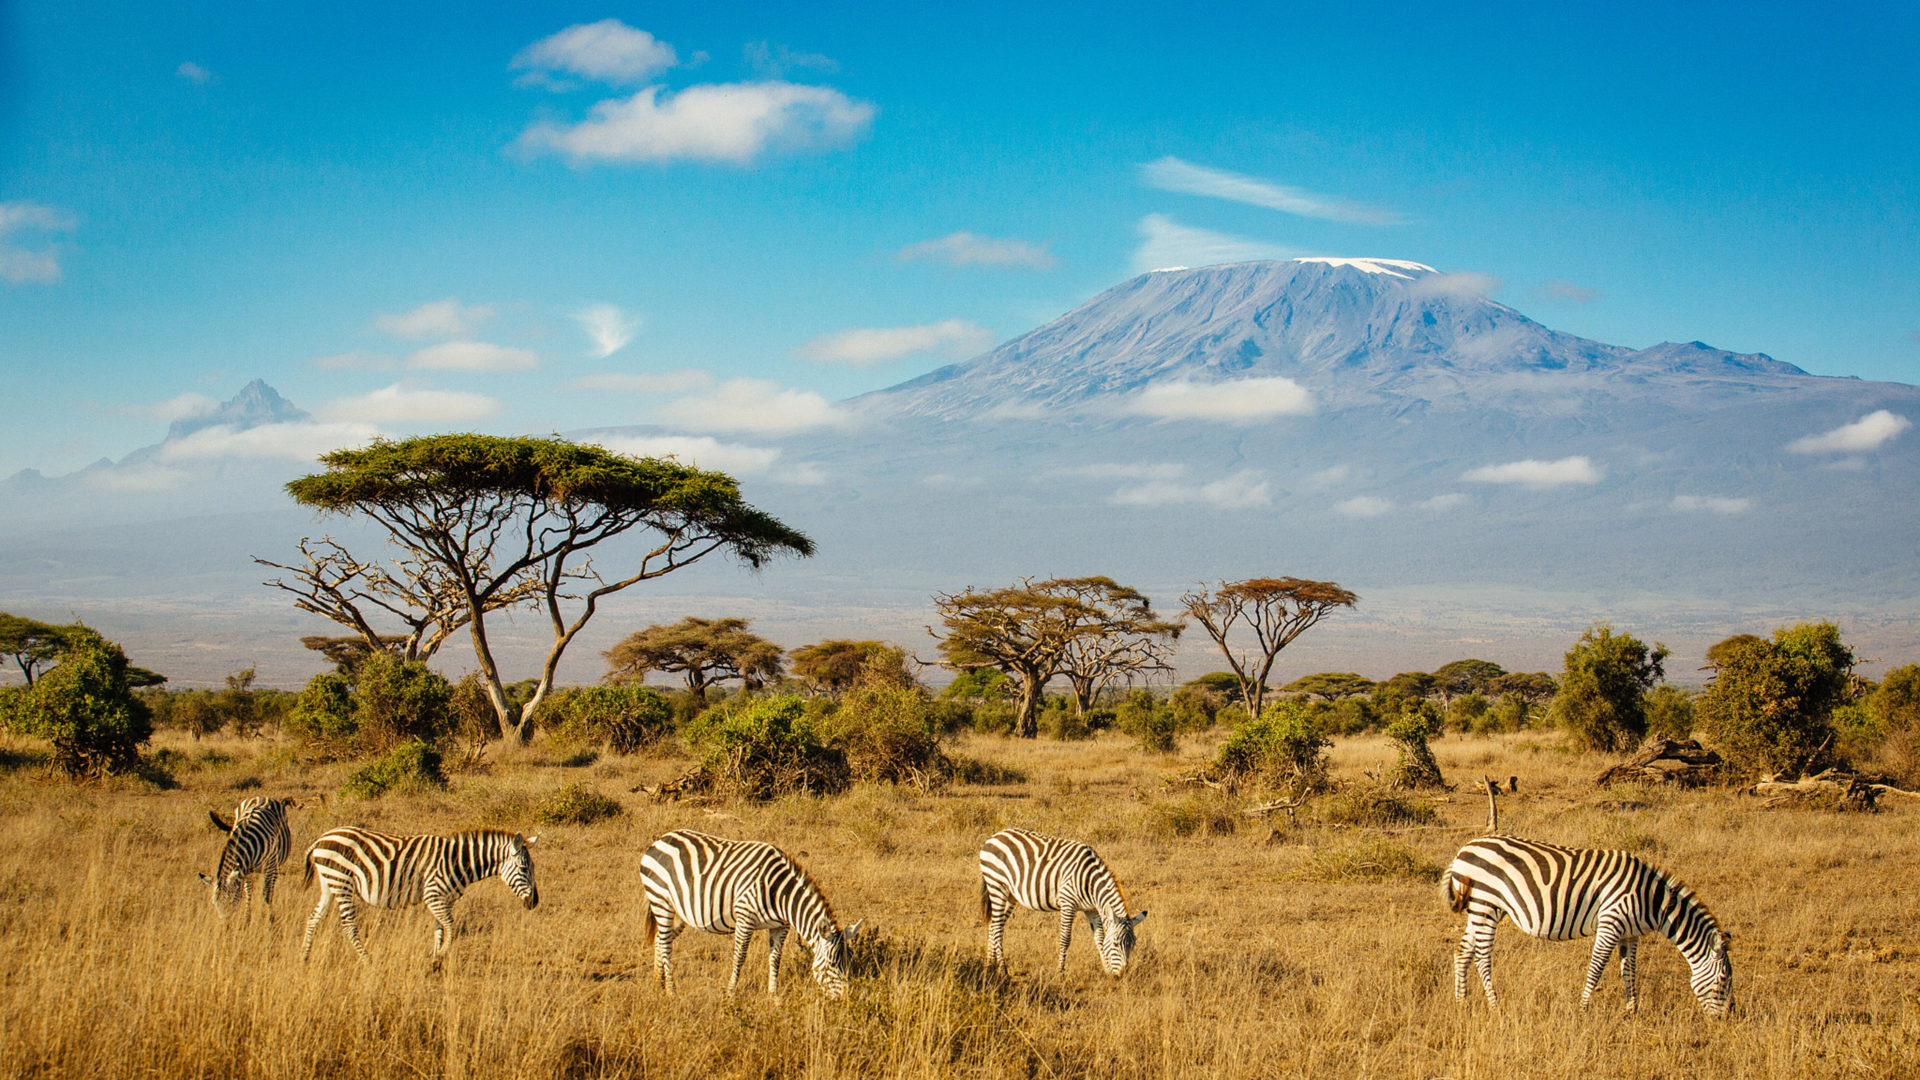 Mount Kilimanjaro, Zebras in Amboseli National Park, Southern Kenya, Desktop wallpapers, 1920x1080 Full HD Desktop